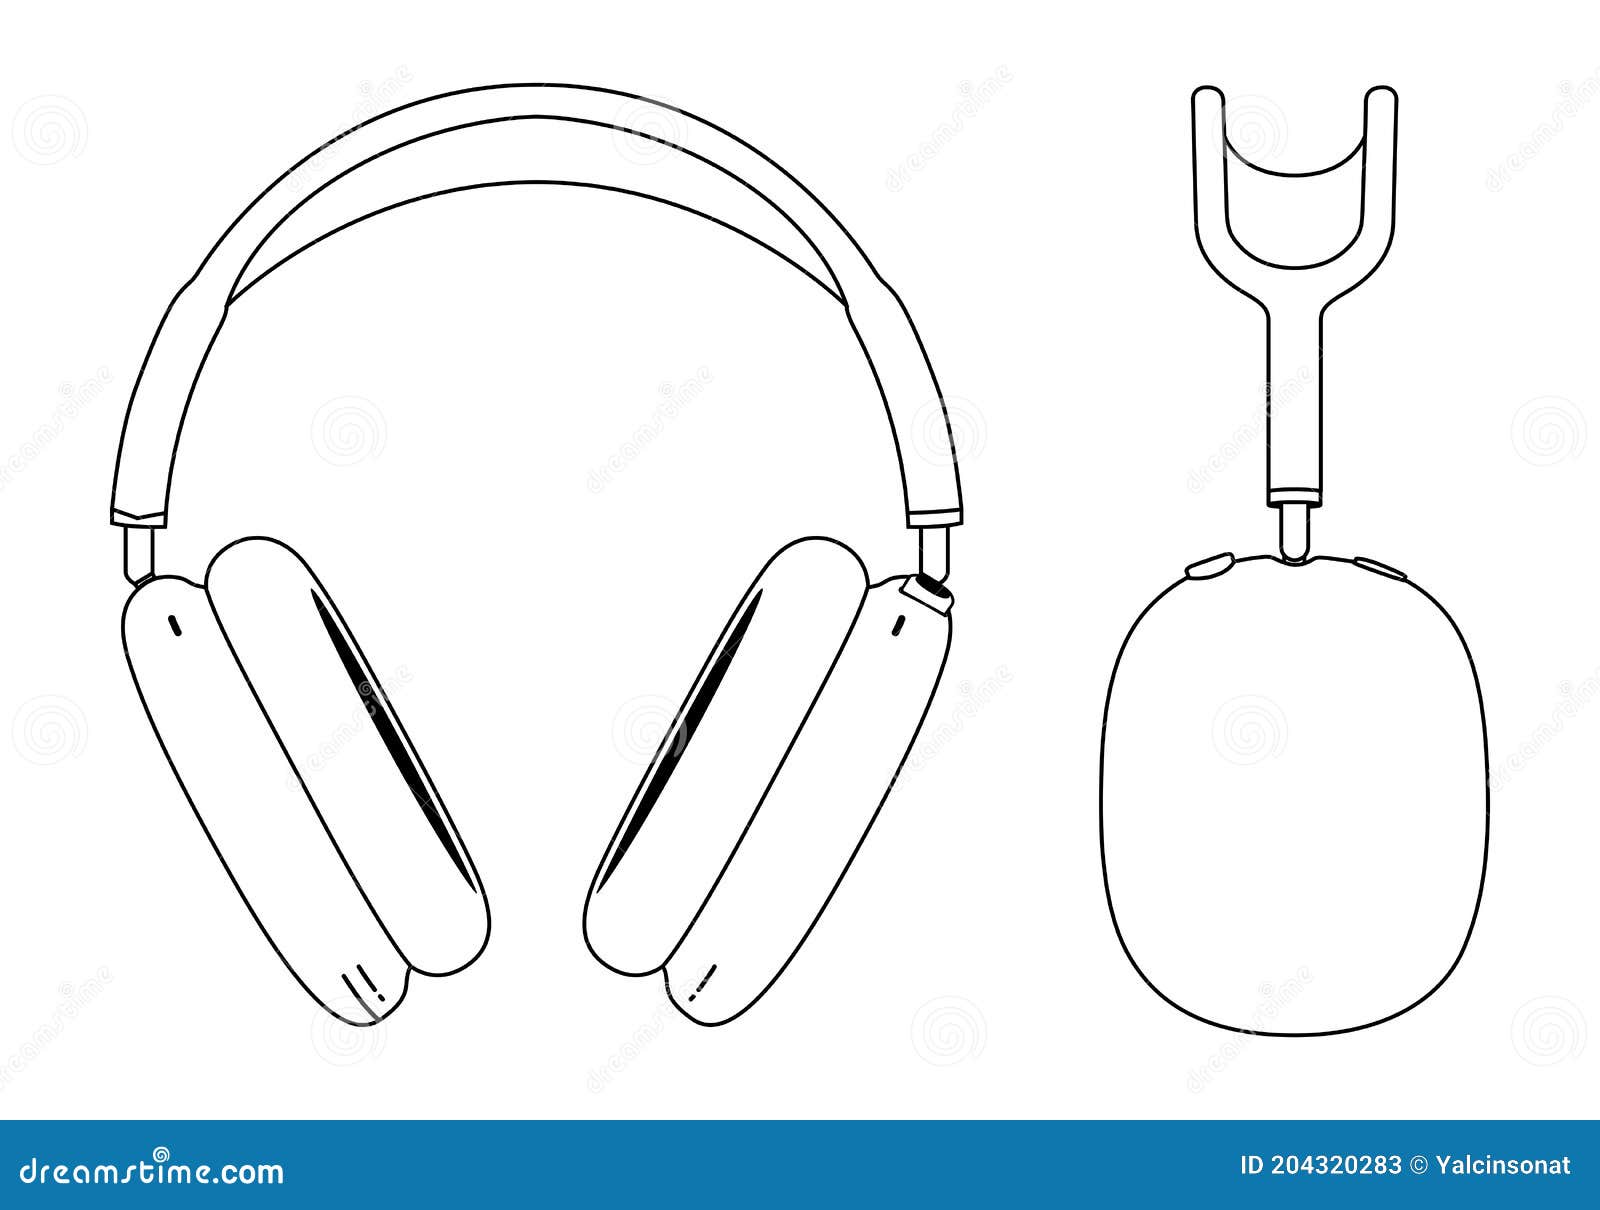 Premium Vector  A silver colored air max headphone sticker illustration  vector